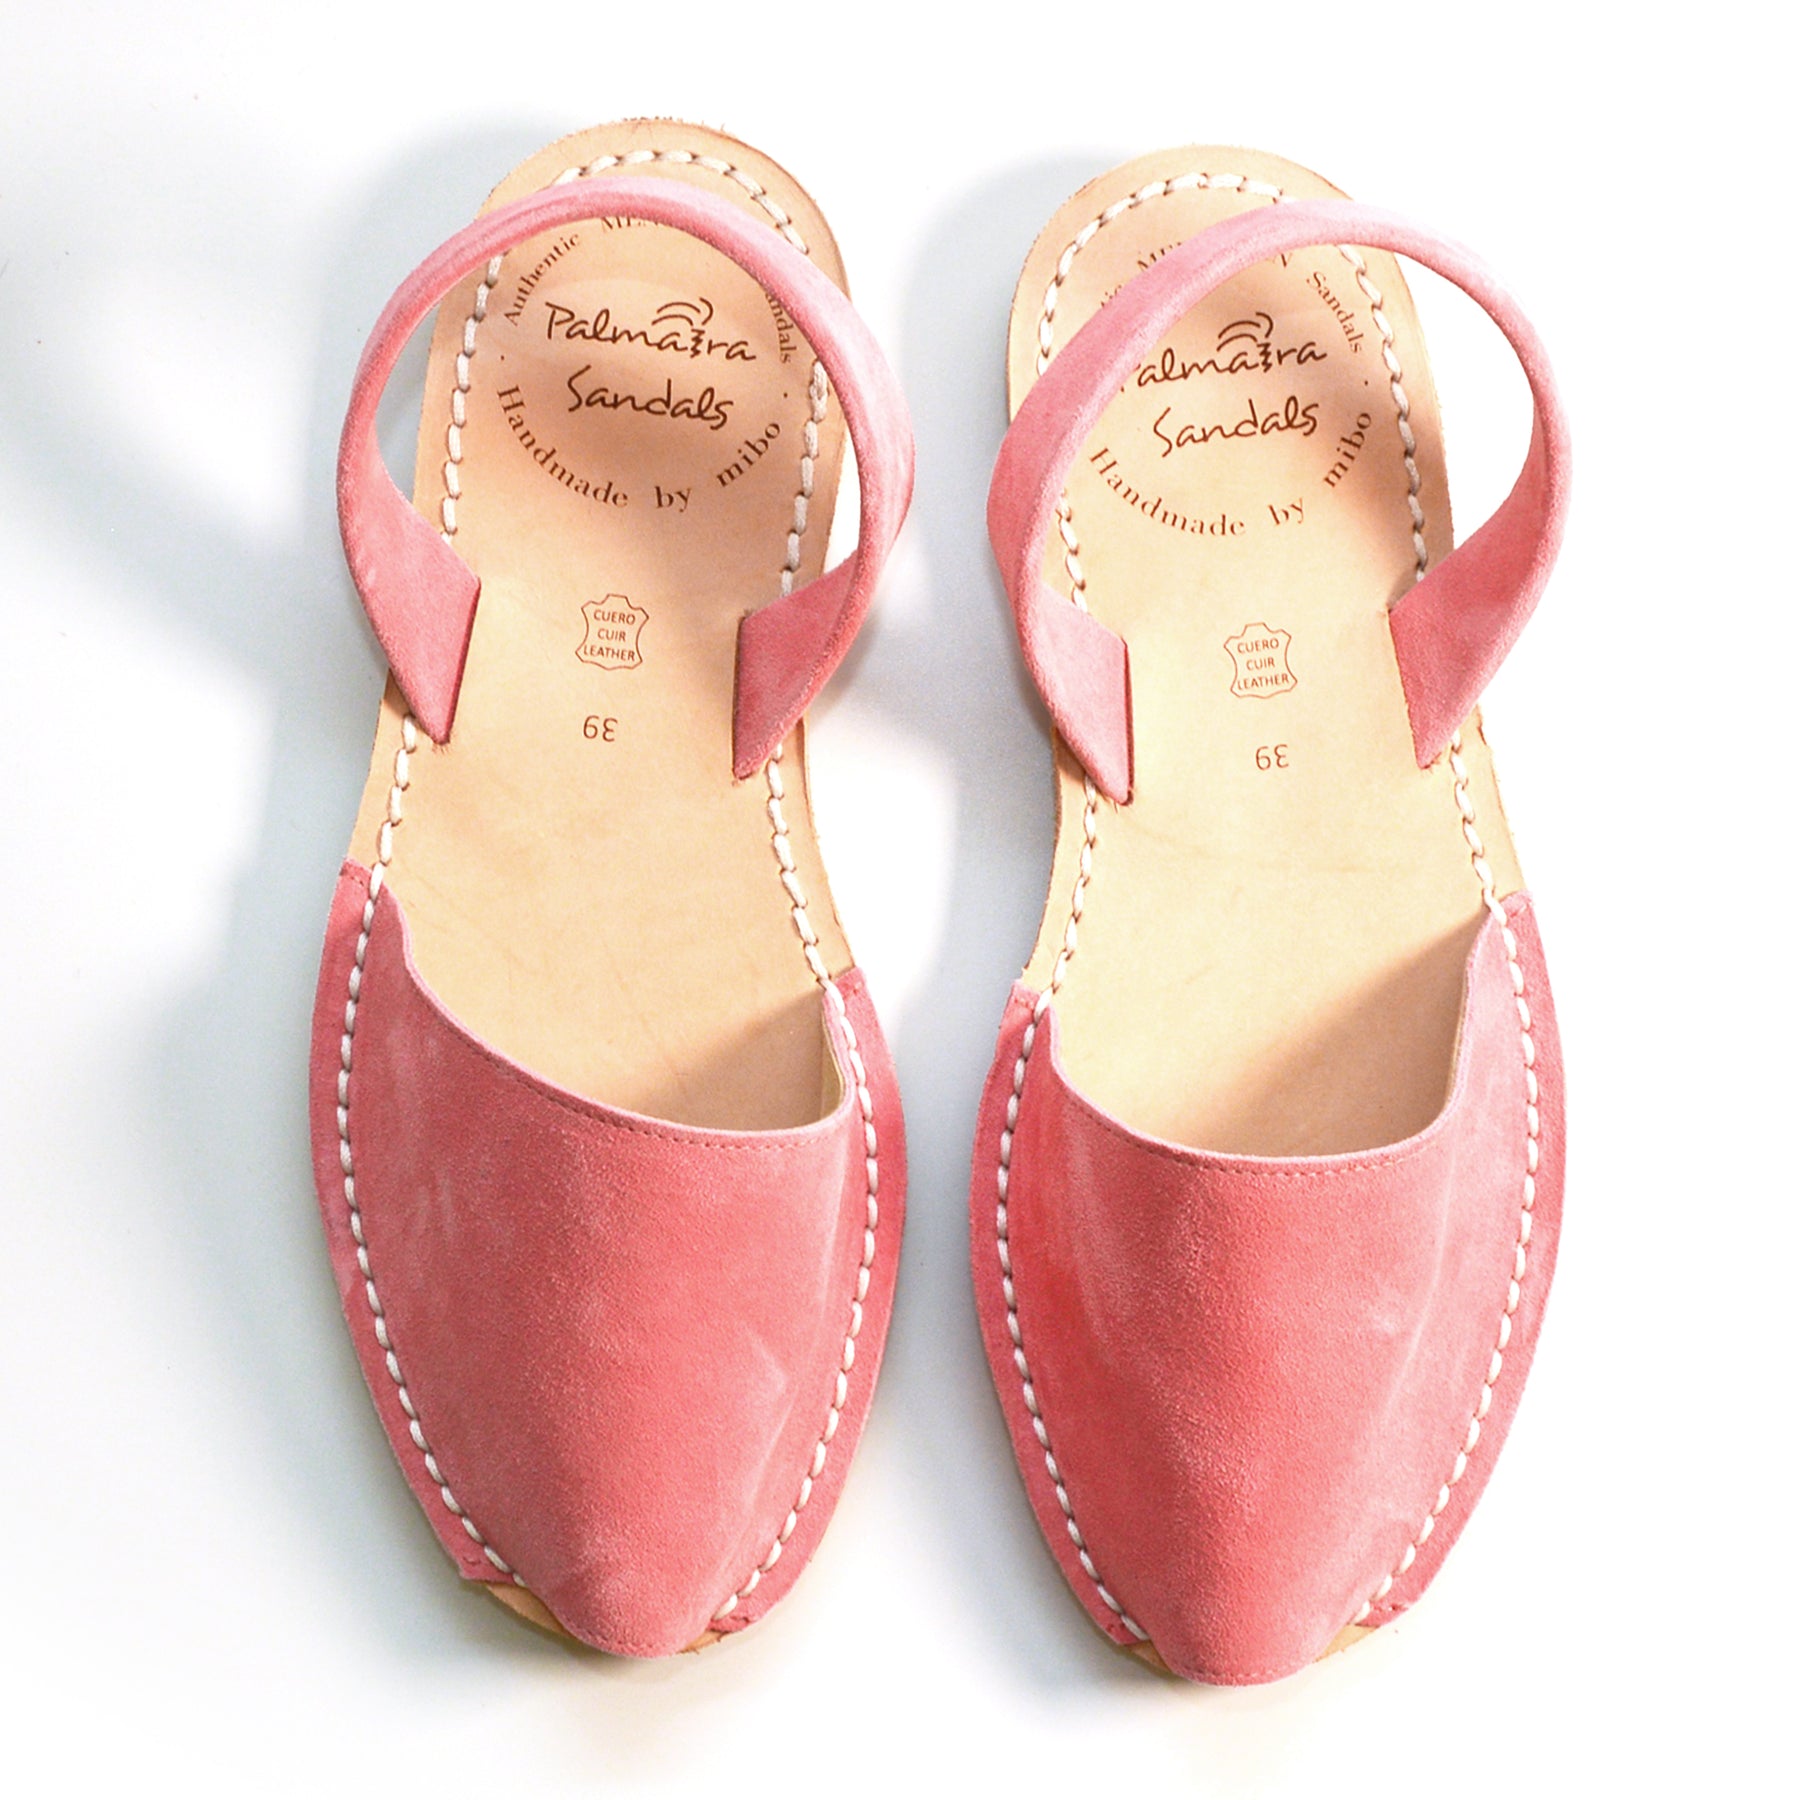 sugar pink suede slingback menorcan spanish avarcas sandals